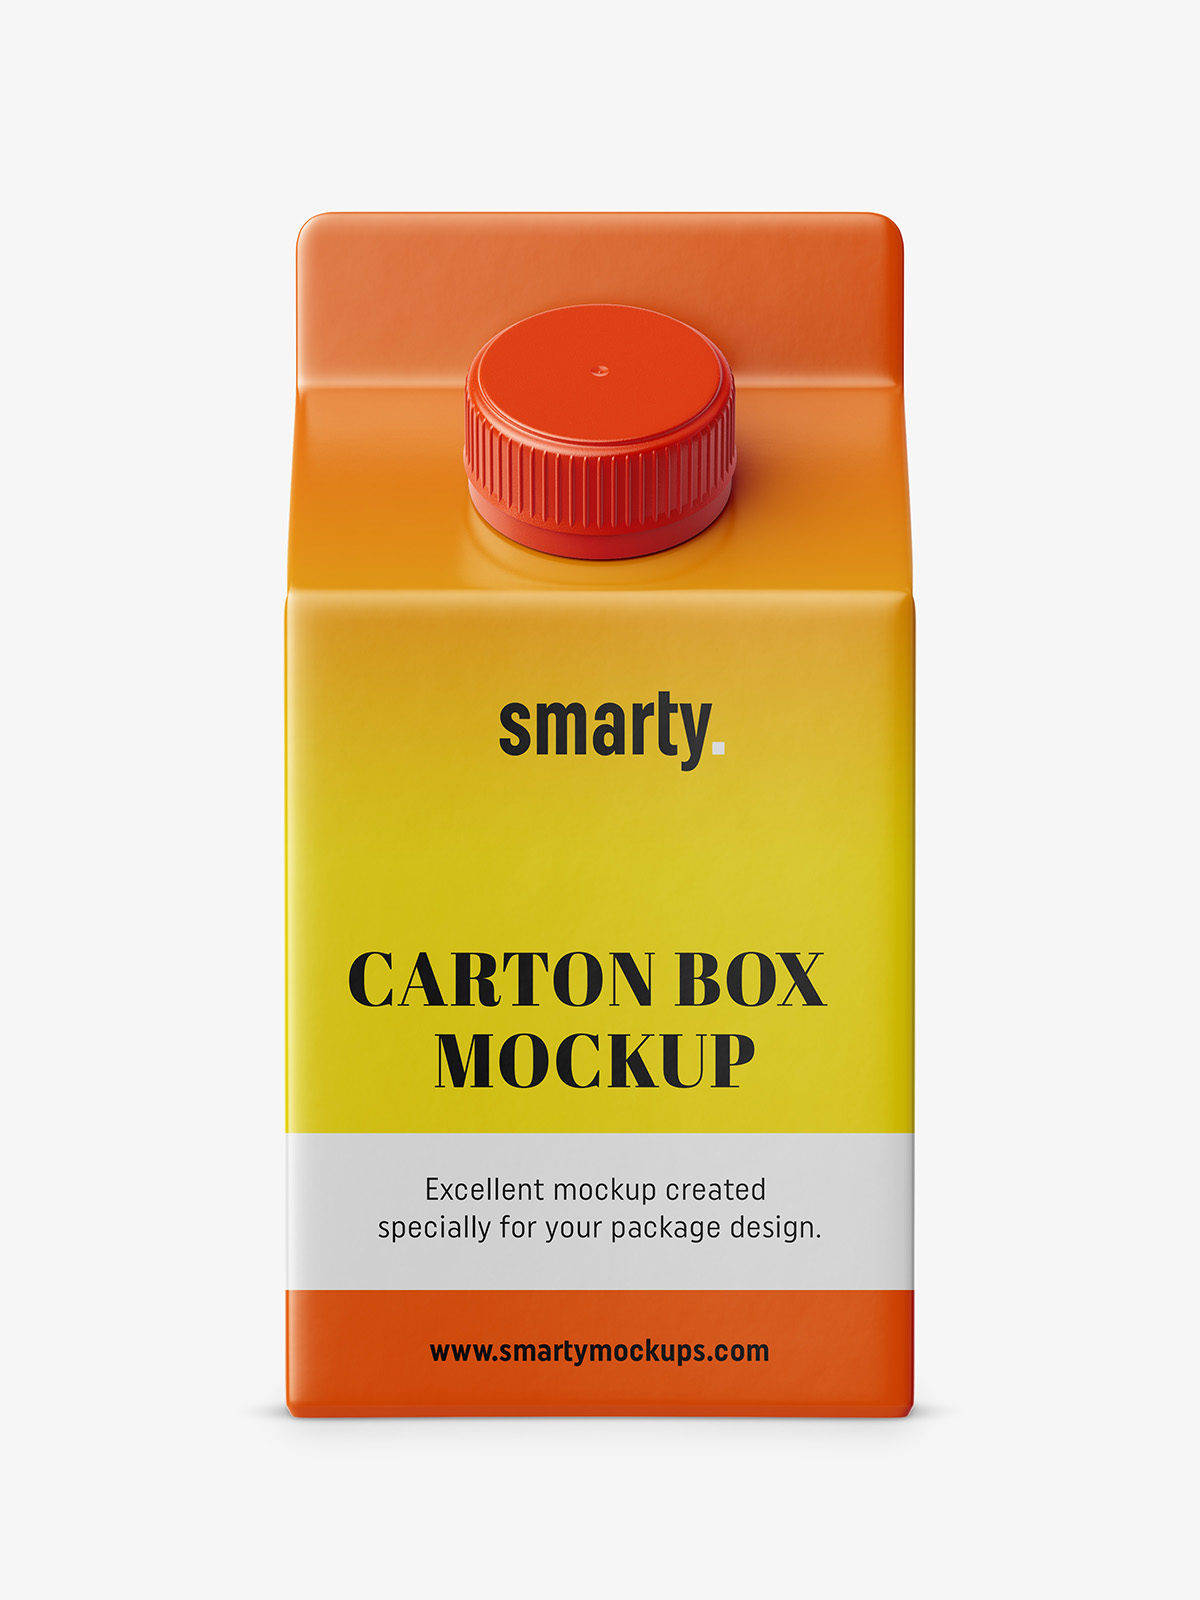 Small juice carton mockup - Smarty Mockups